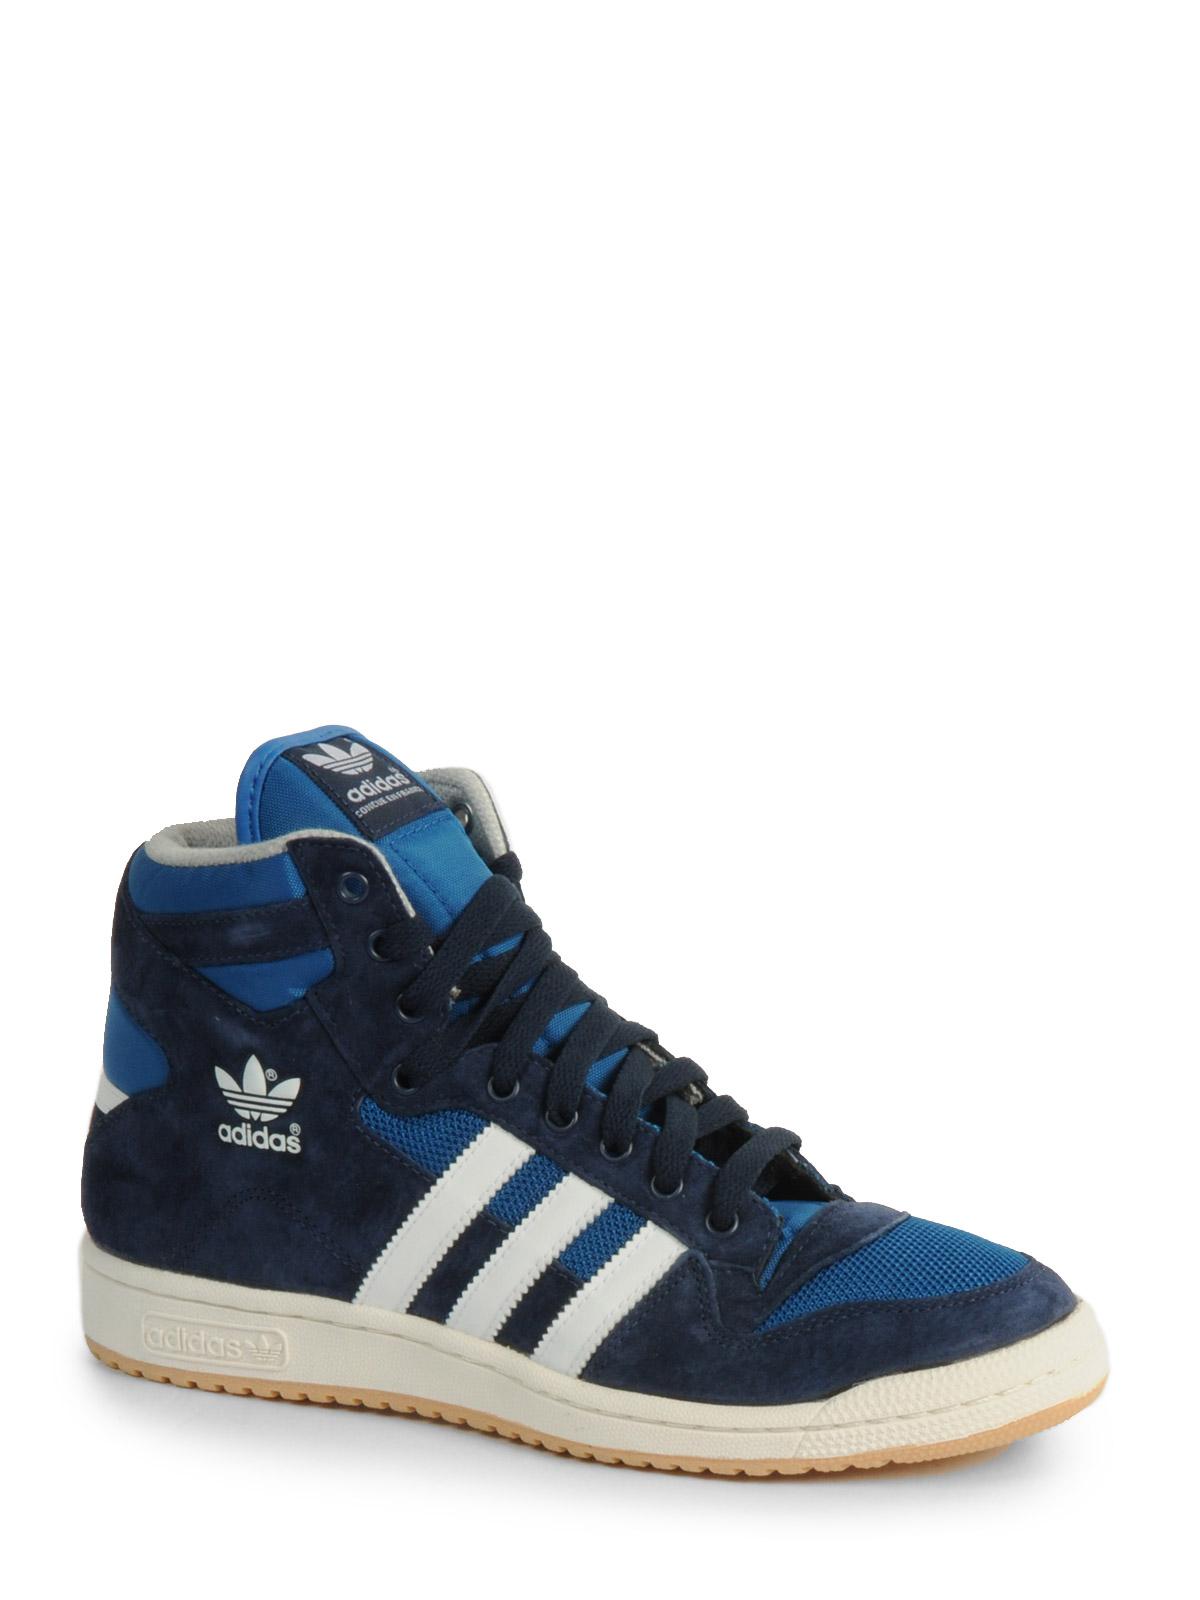 Foto Adidas Decade OG Mid zapatillas azul real/blanco/ blanco vap EU: 43 foto 1148